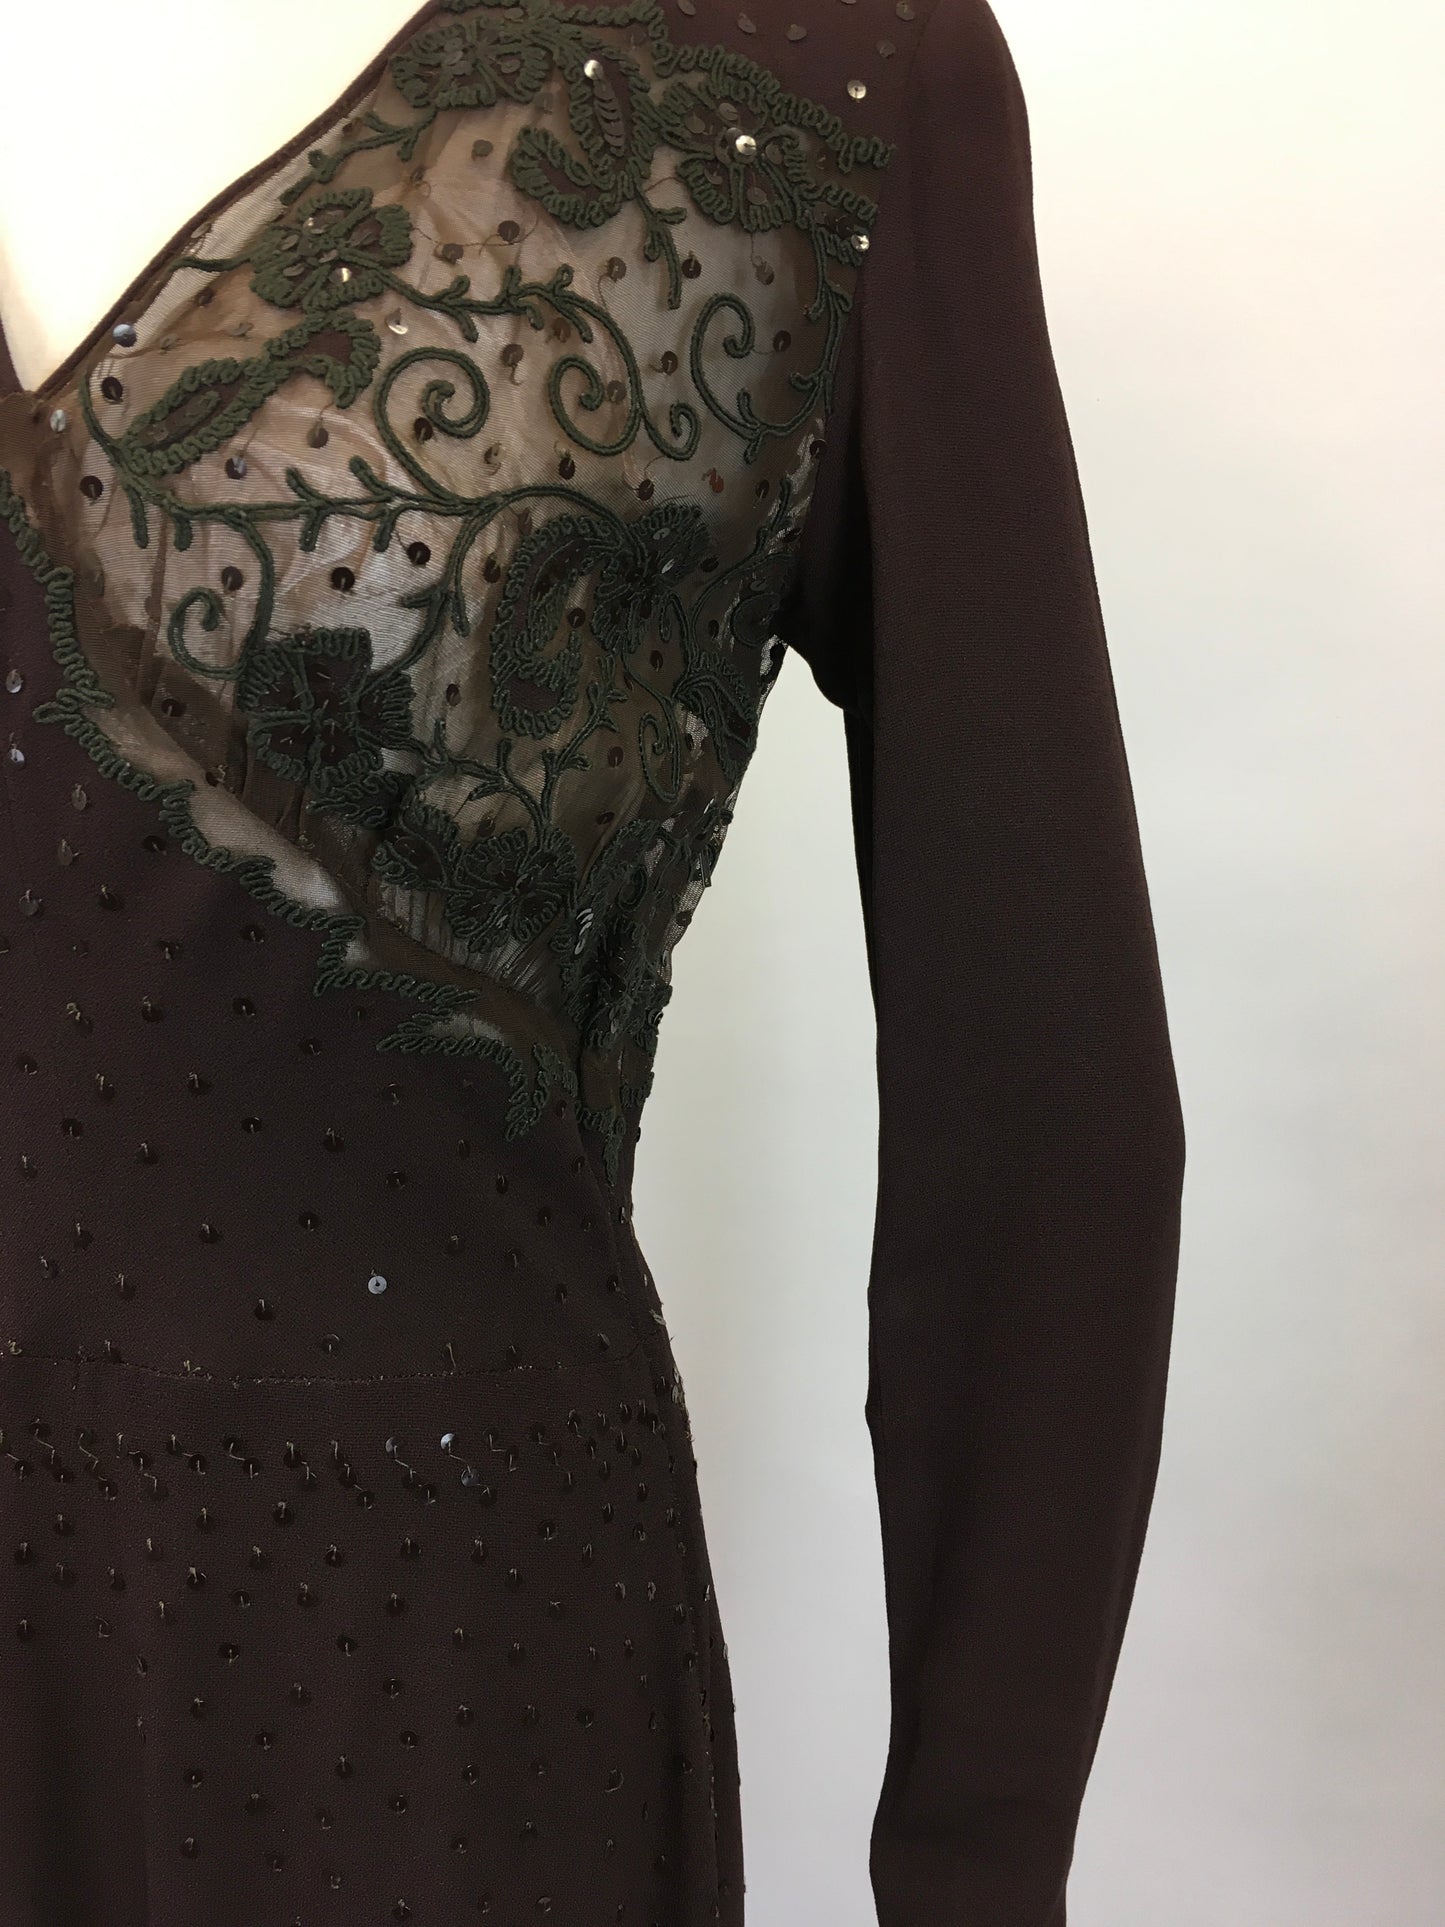 Original 1940’s Amazing illusion Evening dress - in Dark Brown